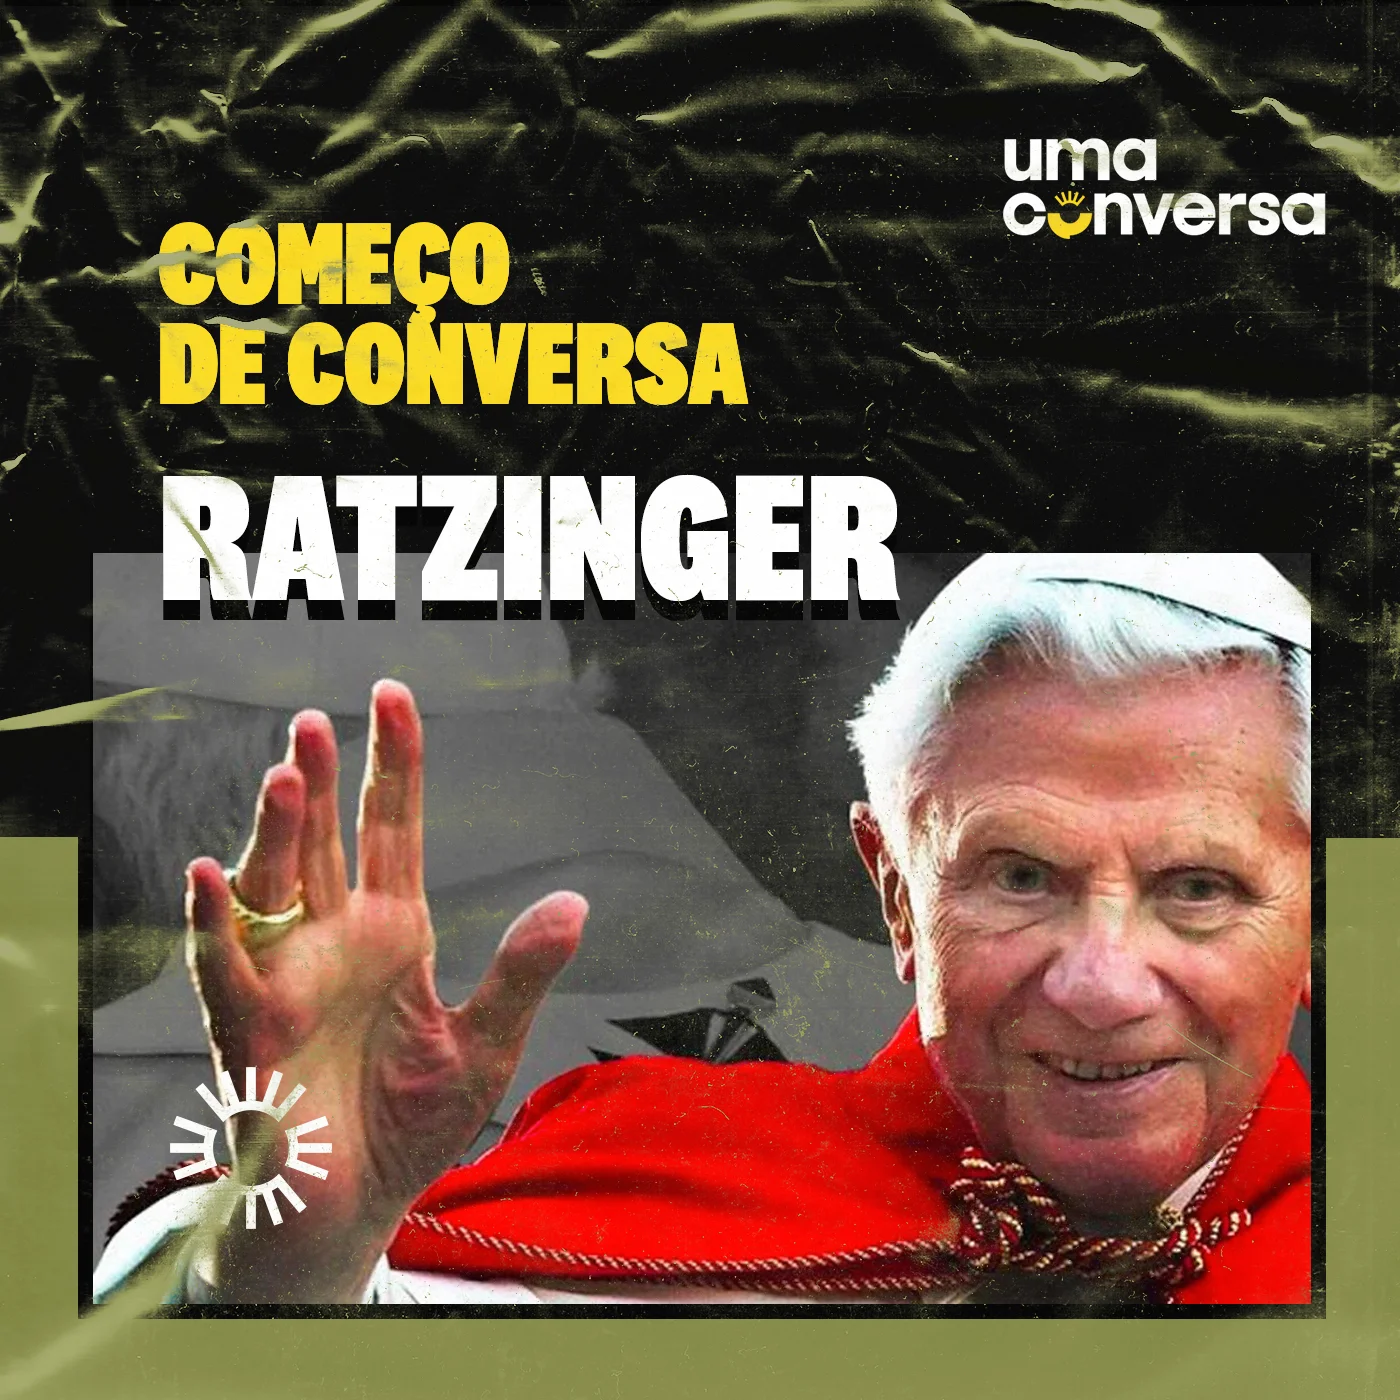 CDC: Ratzinger